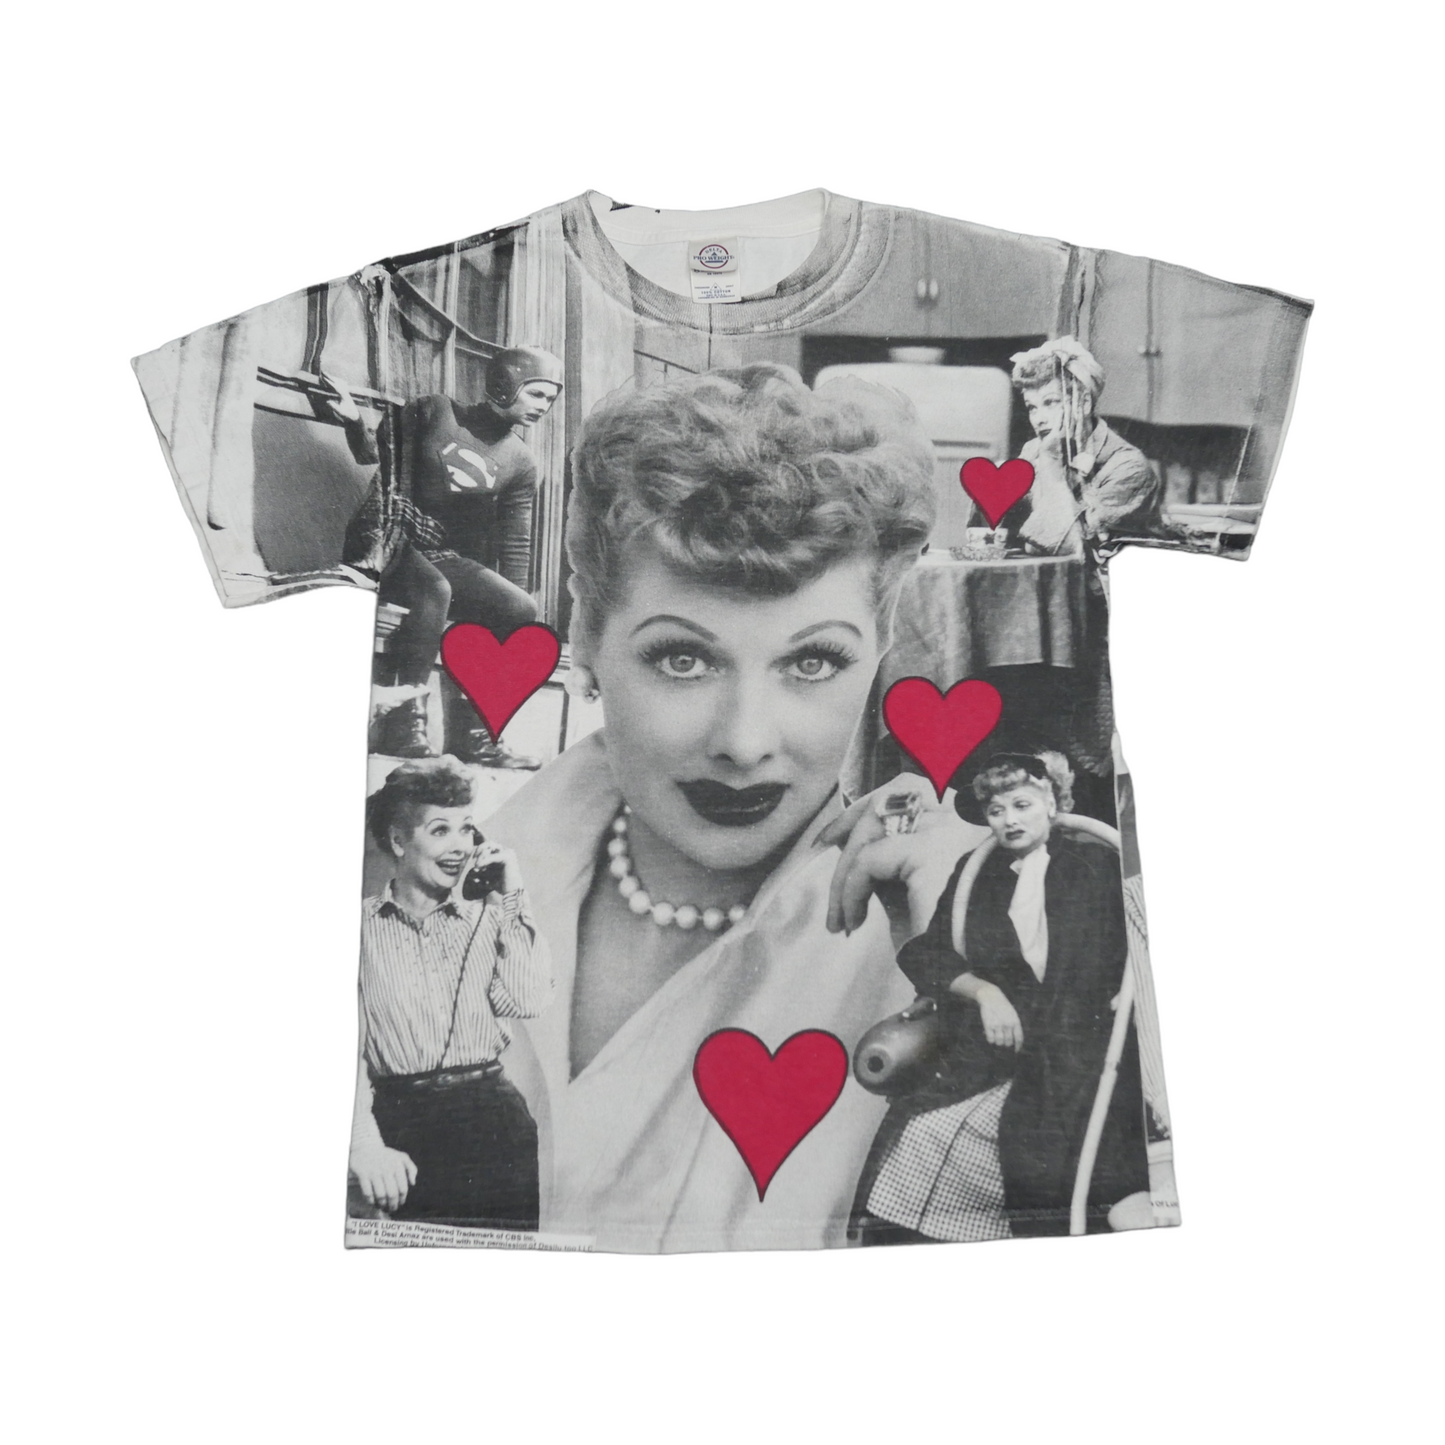 I Love Lucy All Over Print Shirt - Medium